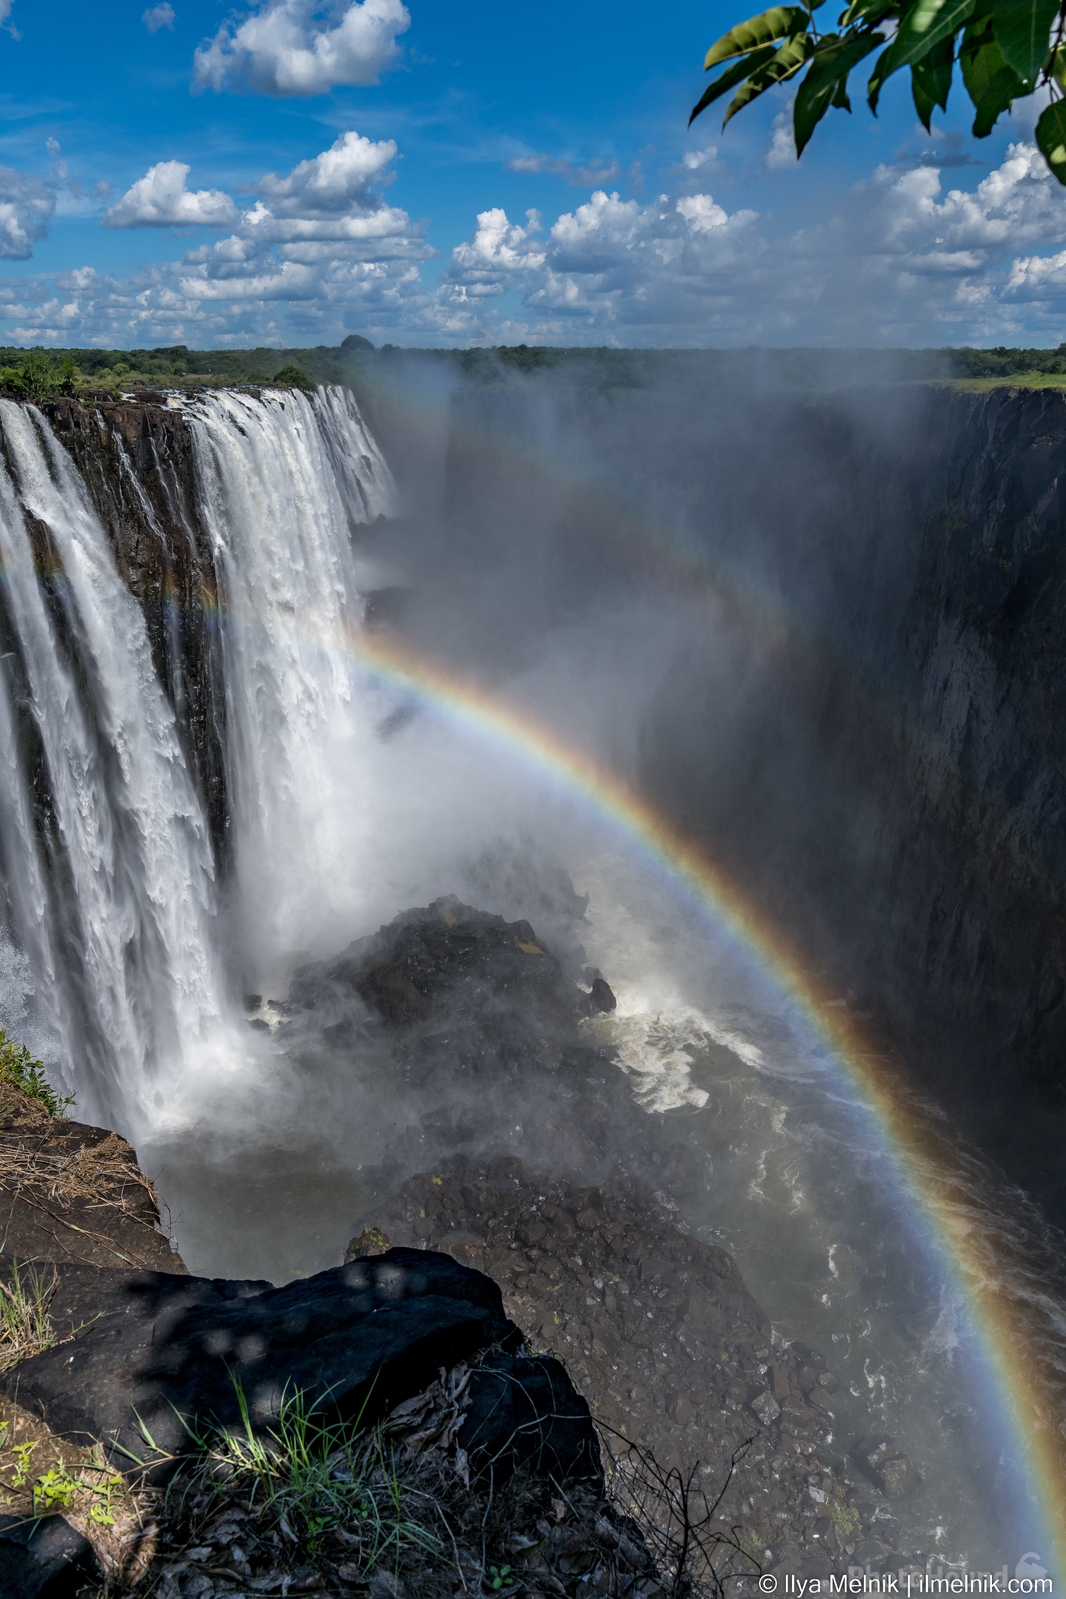 Image of Victoria Falls from Livingston island by Ilya Melnik